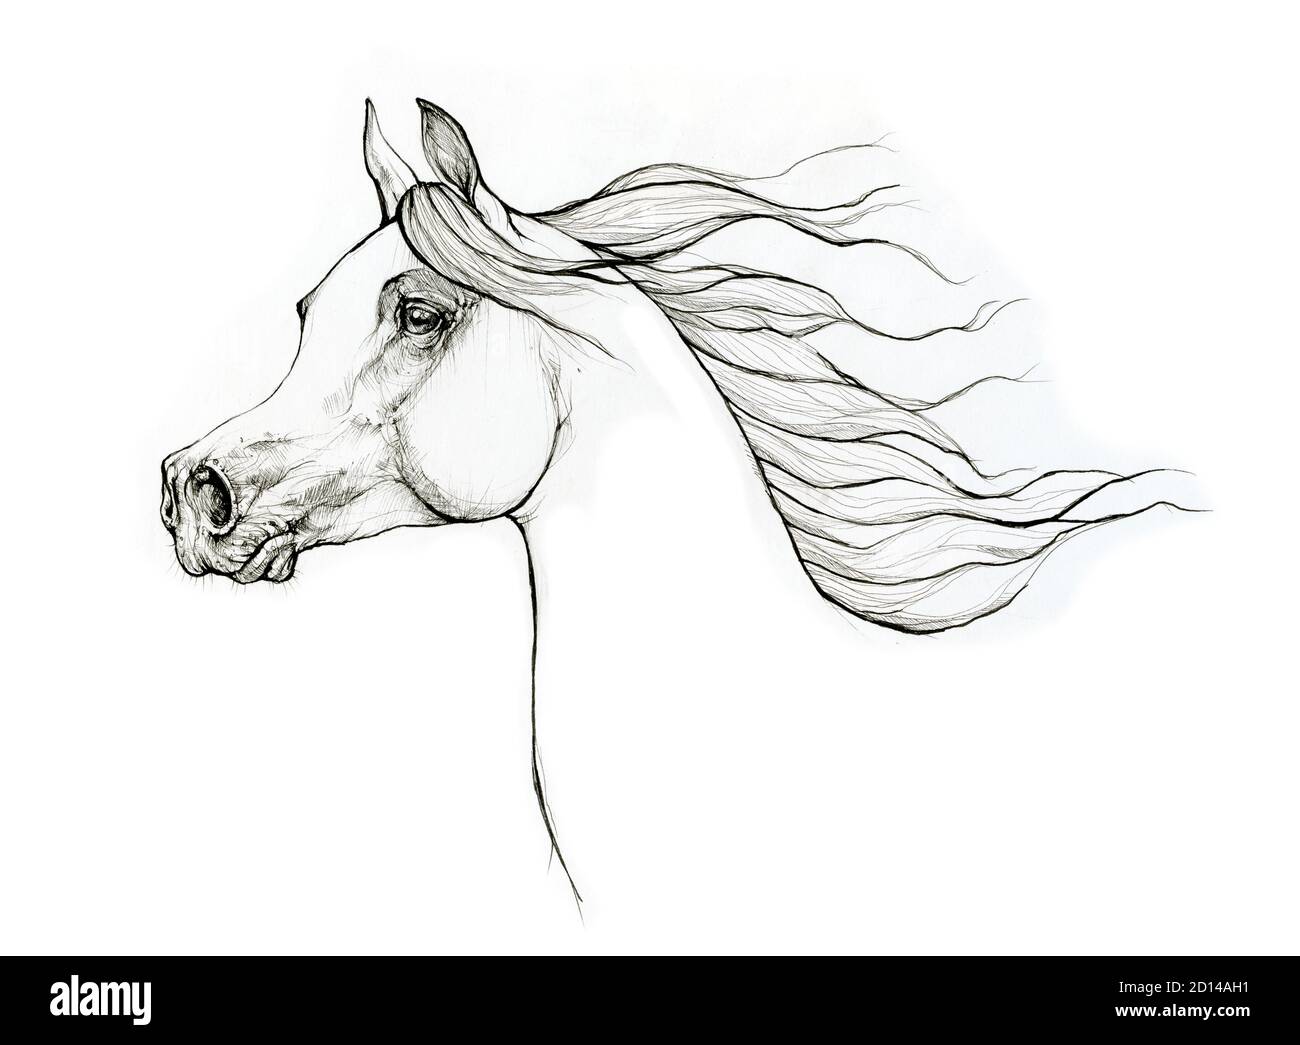 arabian horse head Stock Photo - Alamy